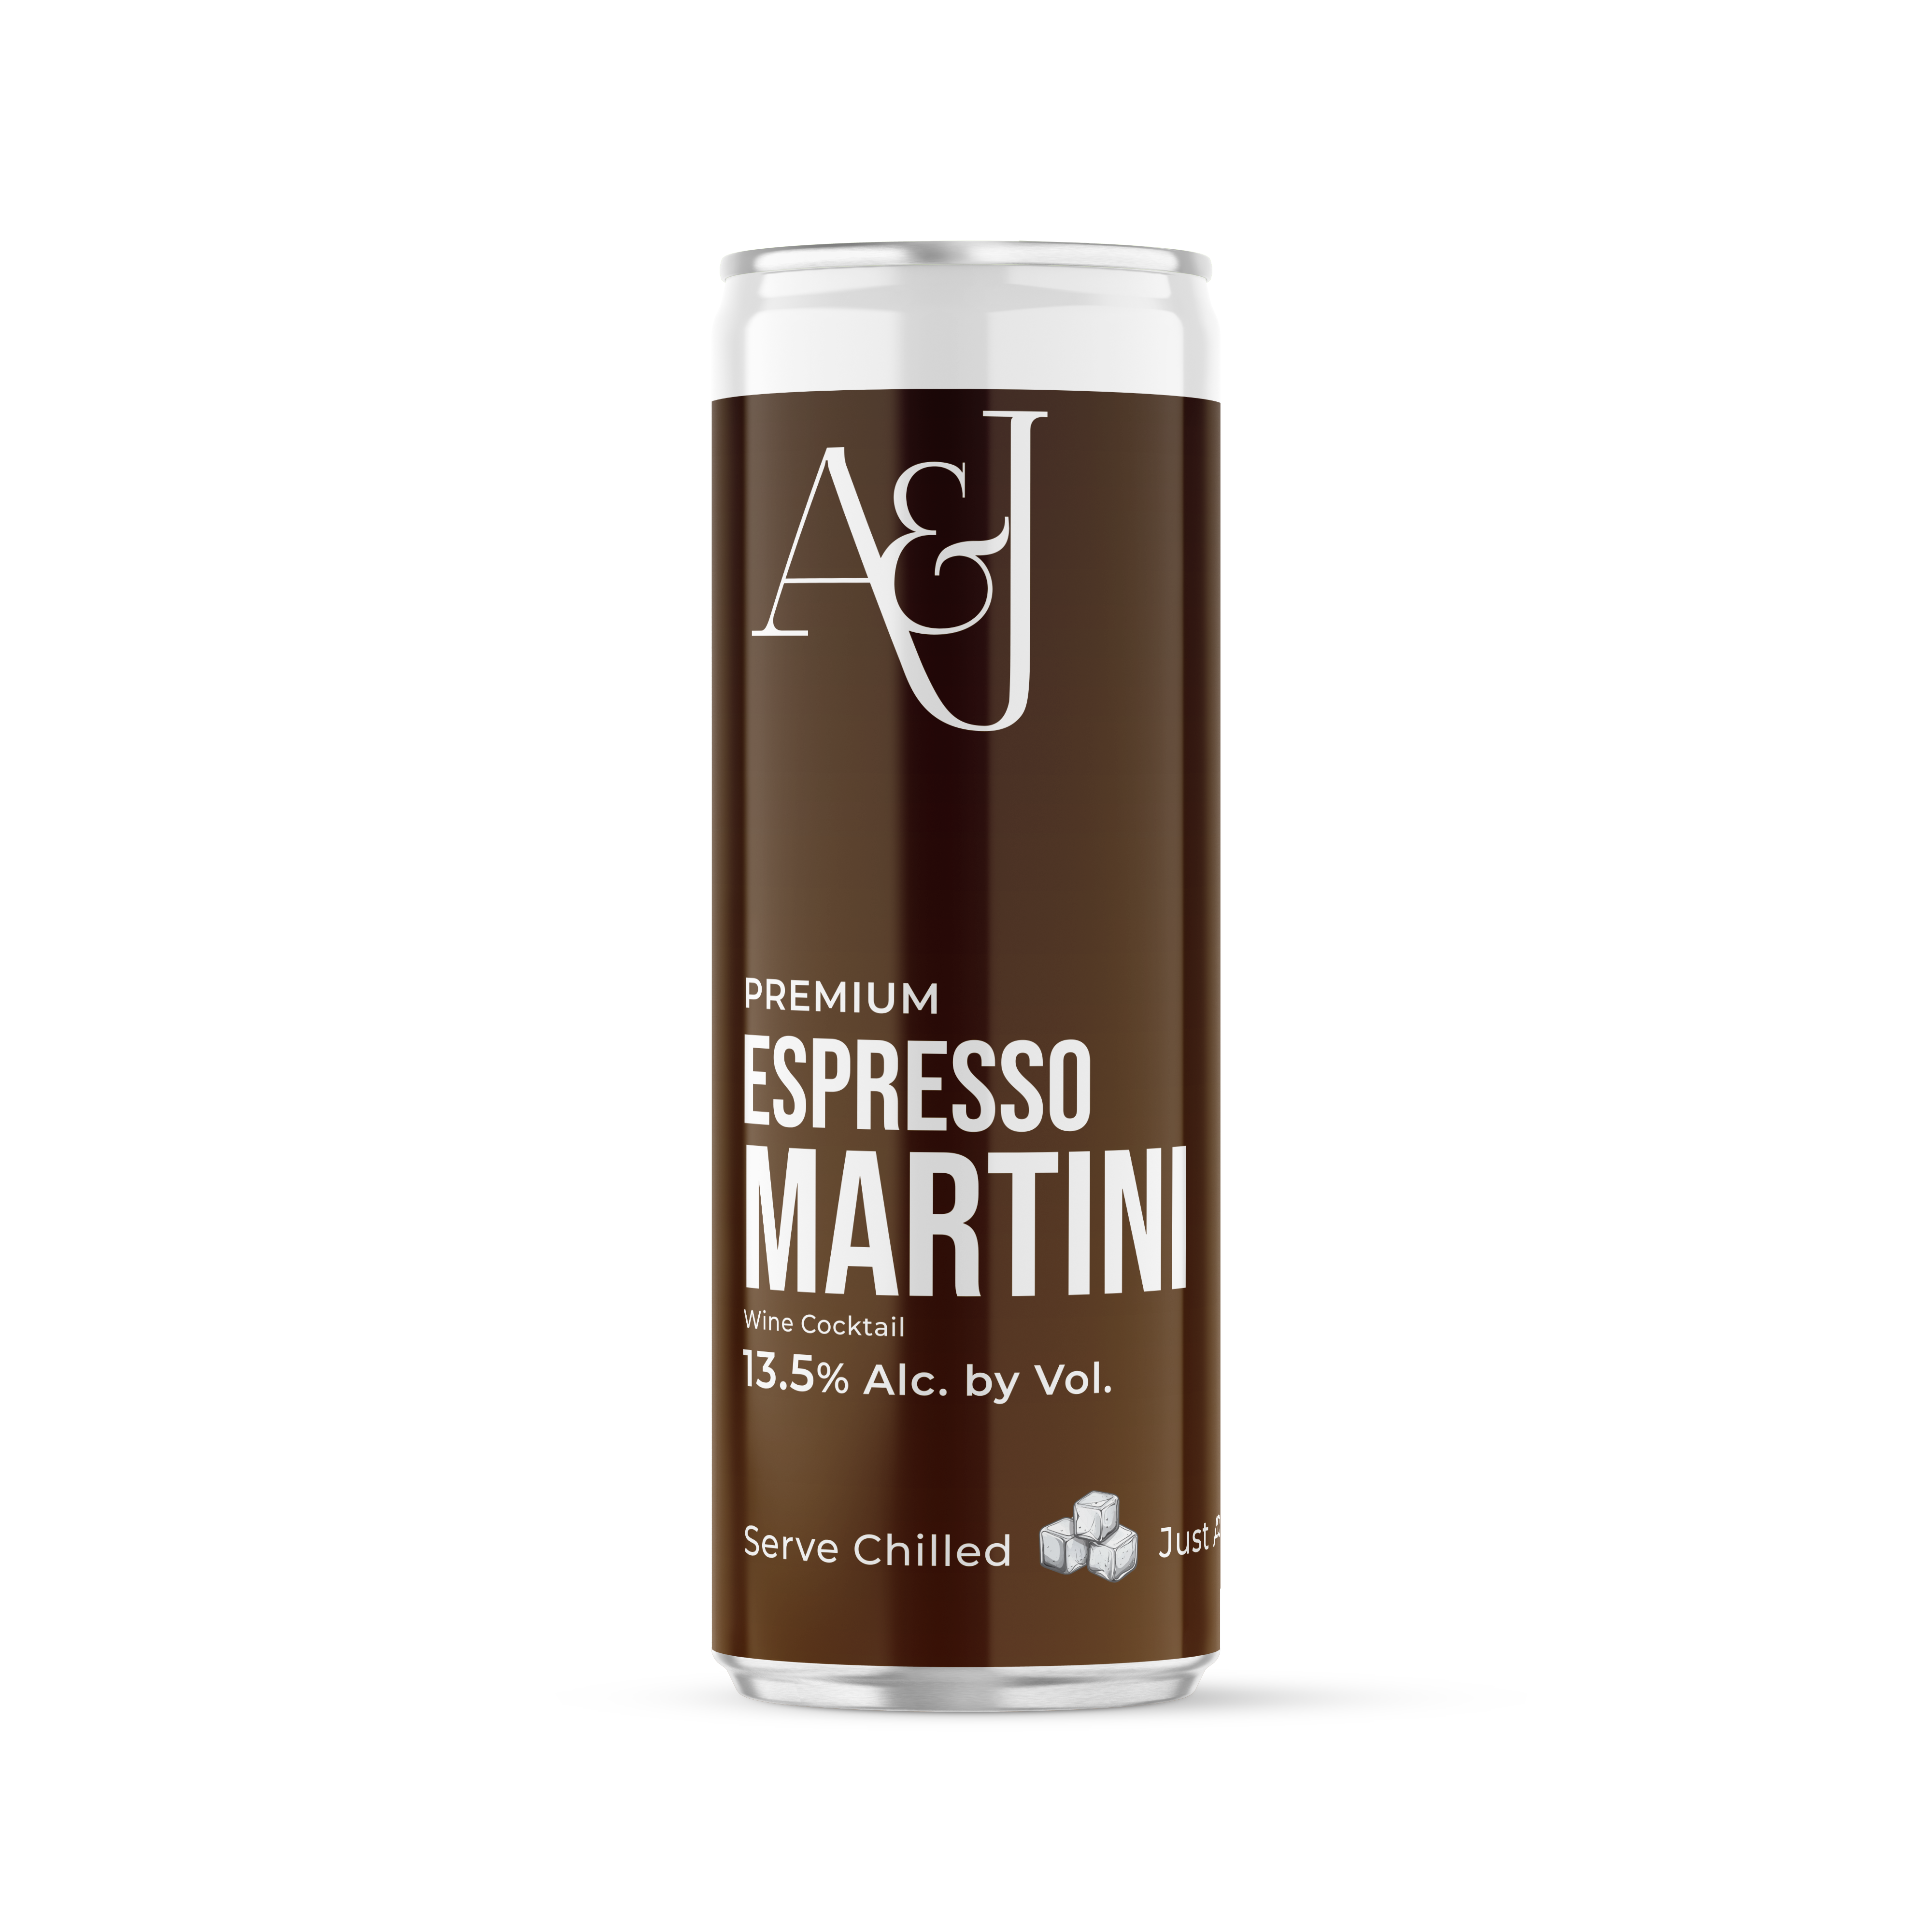 Product Image for ESPRESSO MARTINI WINE COCKTAIL 